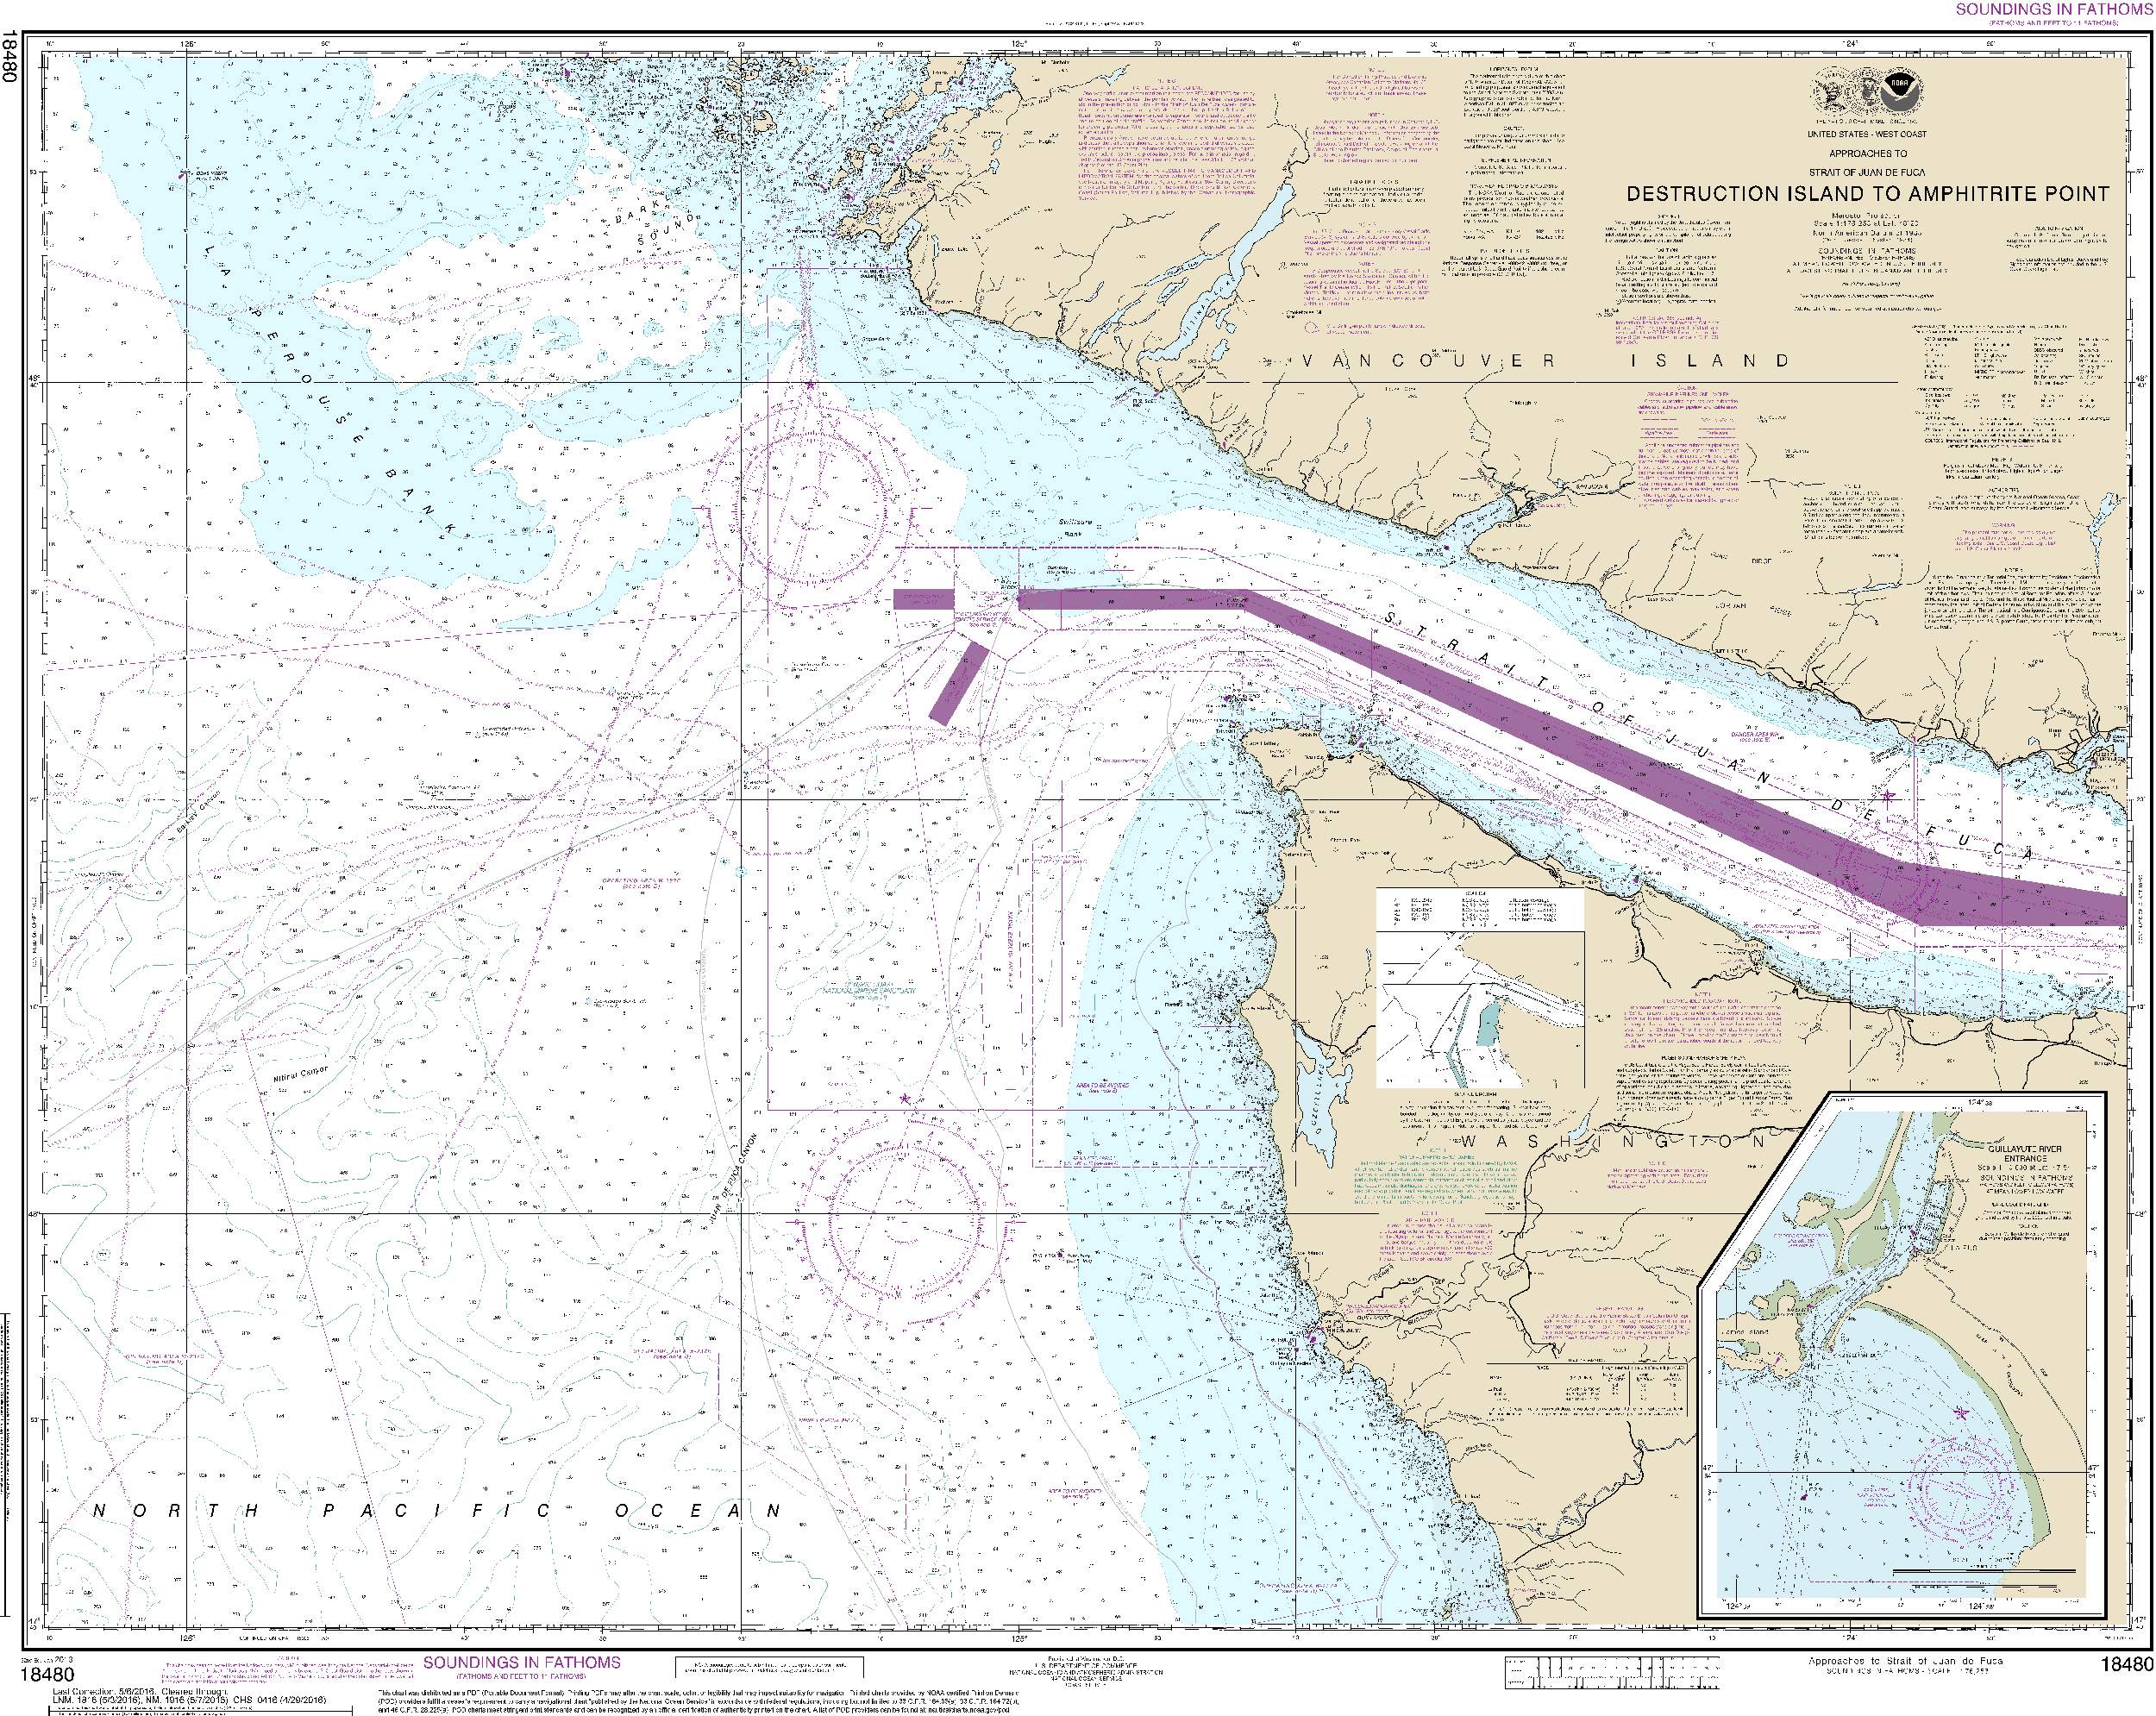 NOAA Nautical Chart 18480: Approaches to Strait of Juan de Fuca Destruction lsland to Amphitrite Point